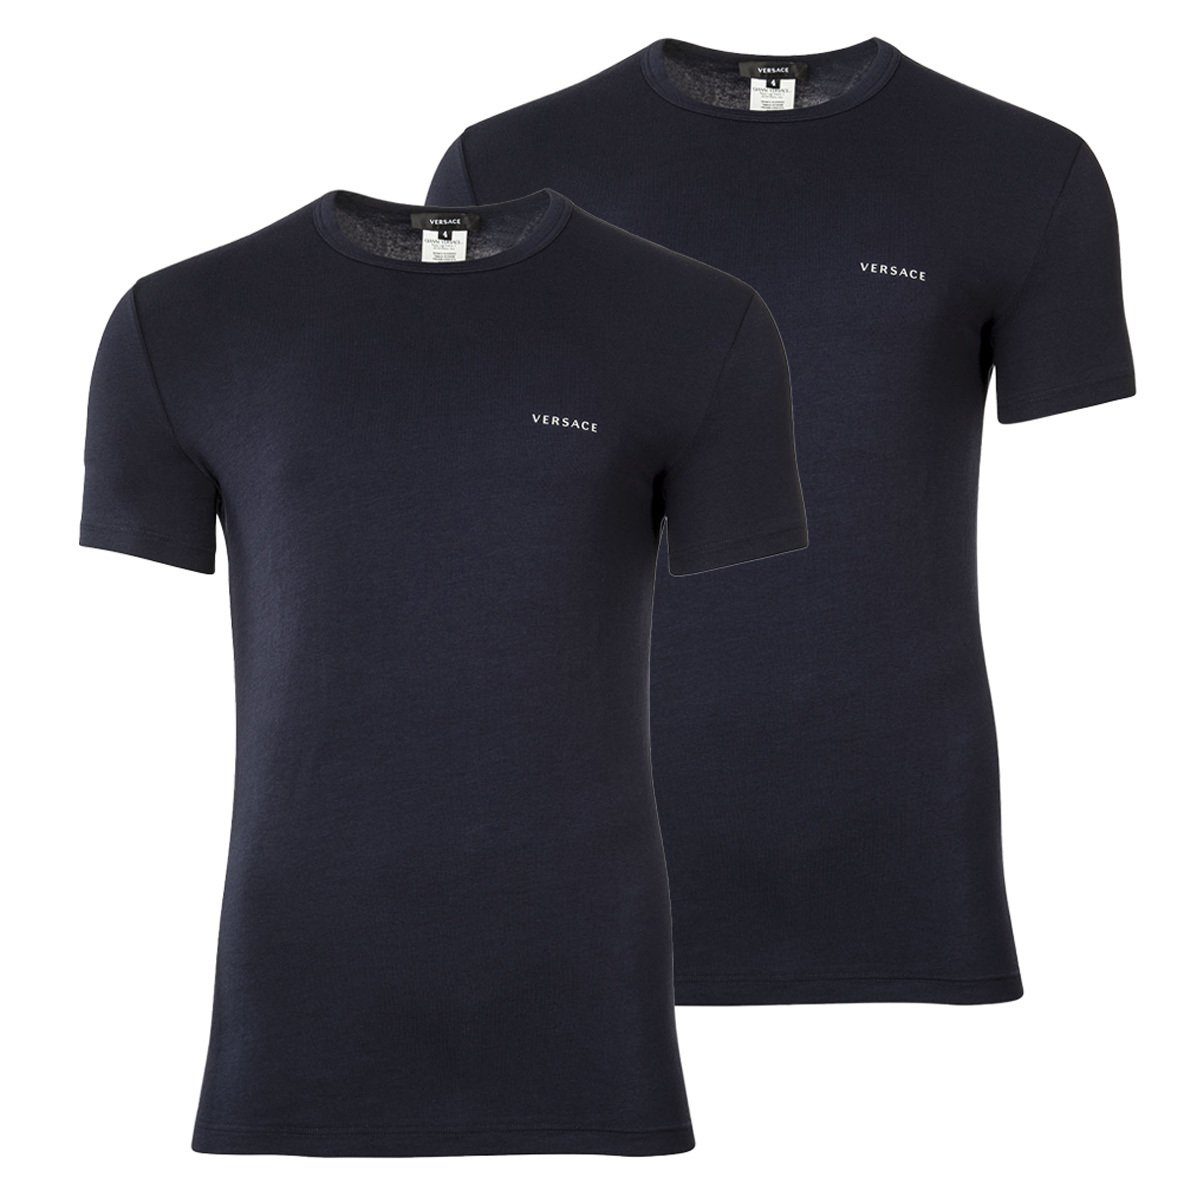 Versace T-Shirt Herren T-Shirt, 2er Pack - Unterhemd, Rundhals Dunkelblau